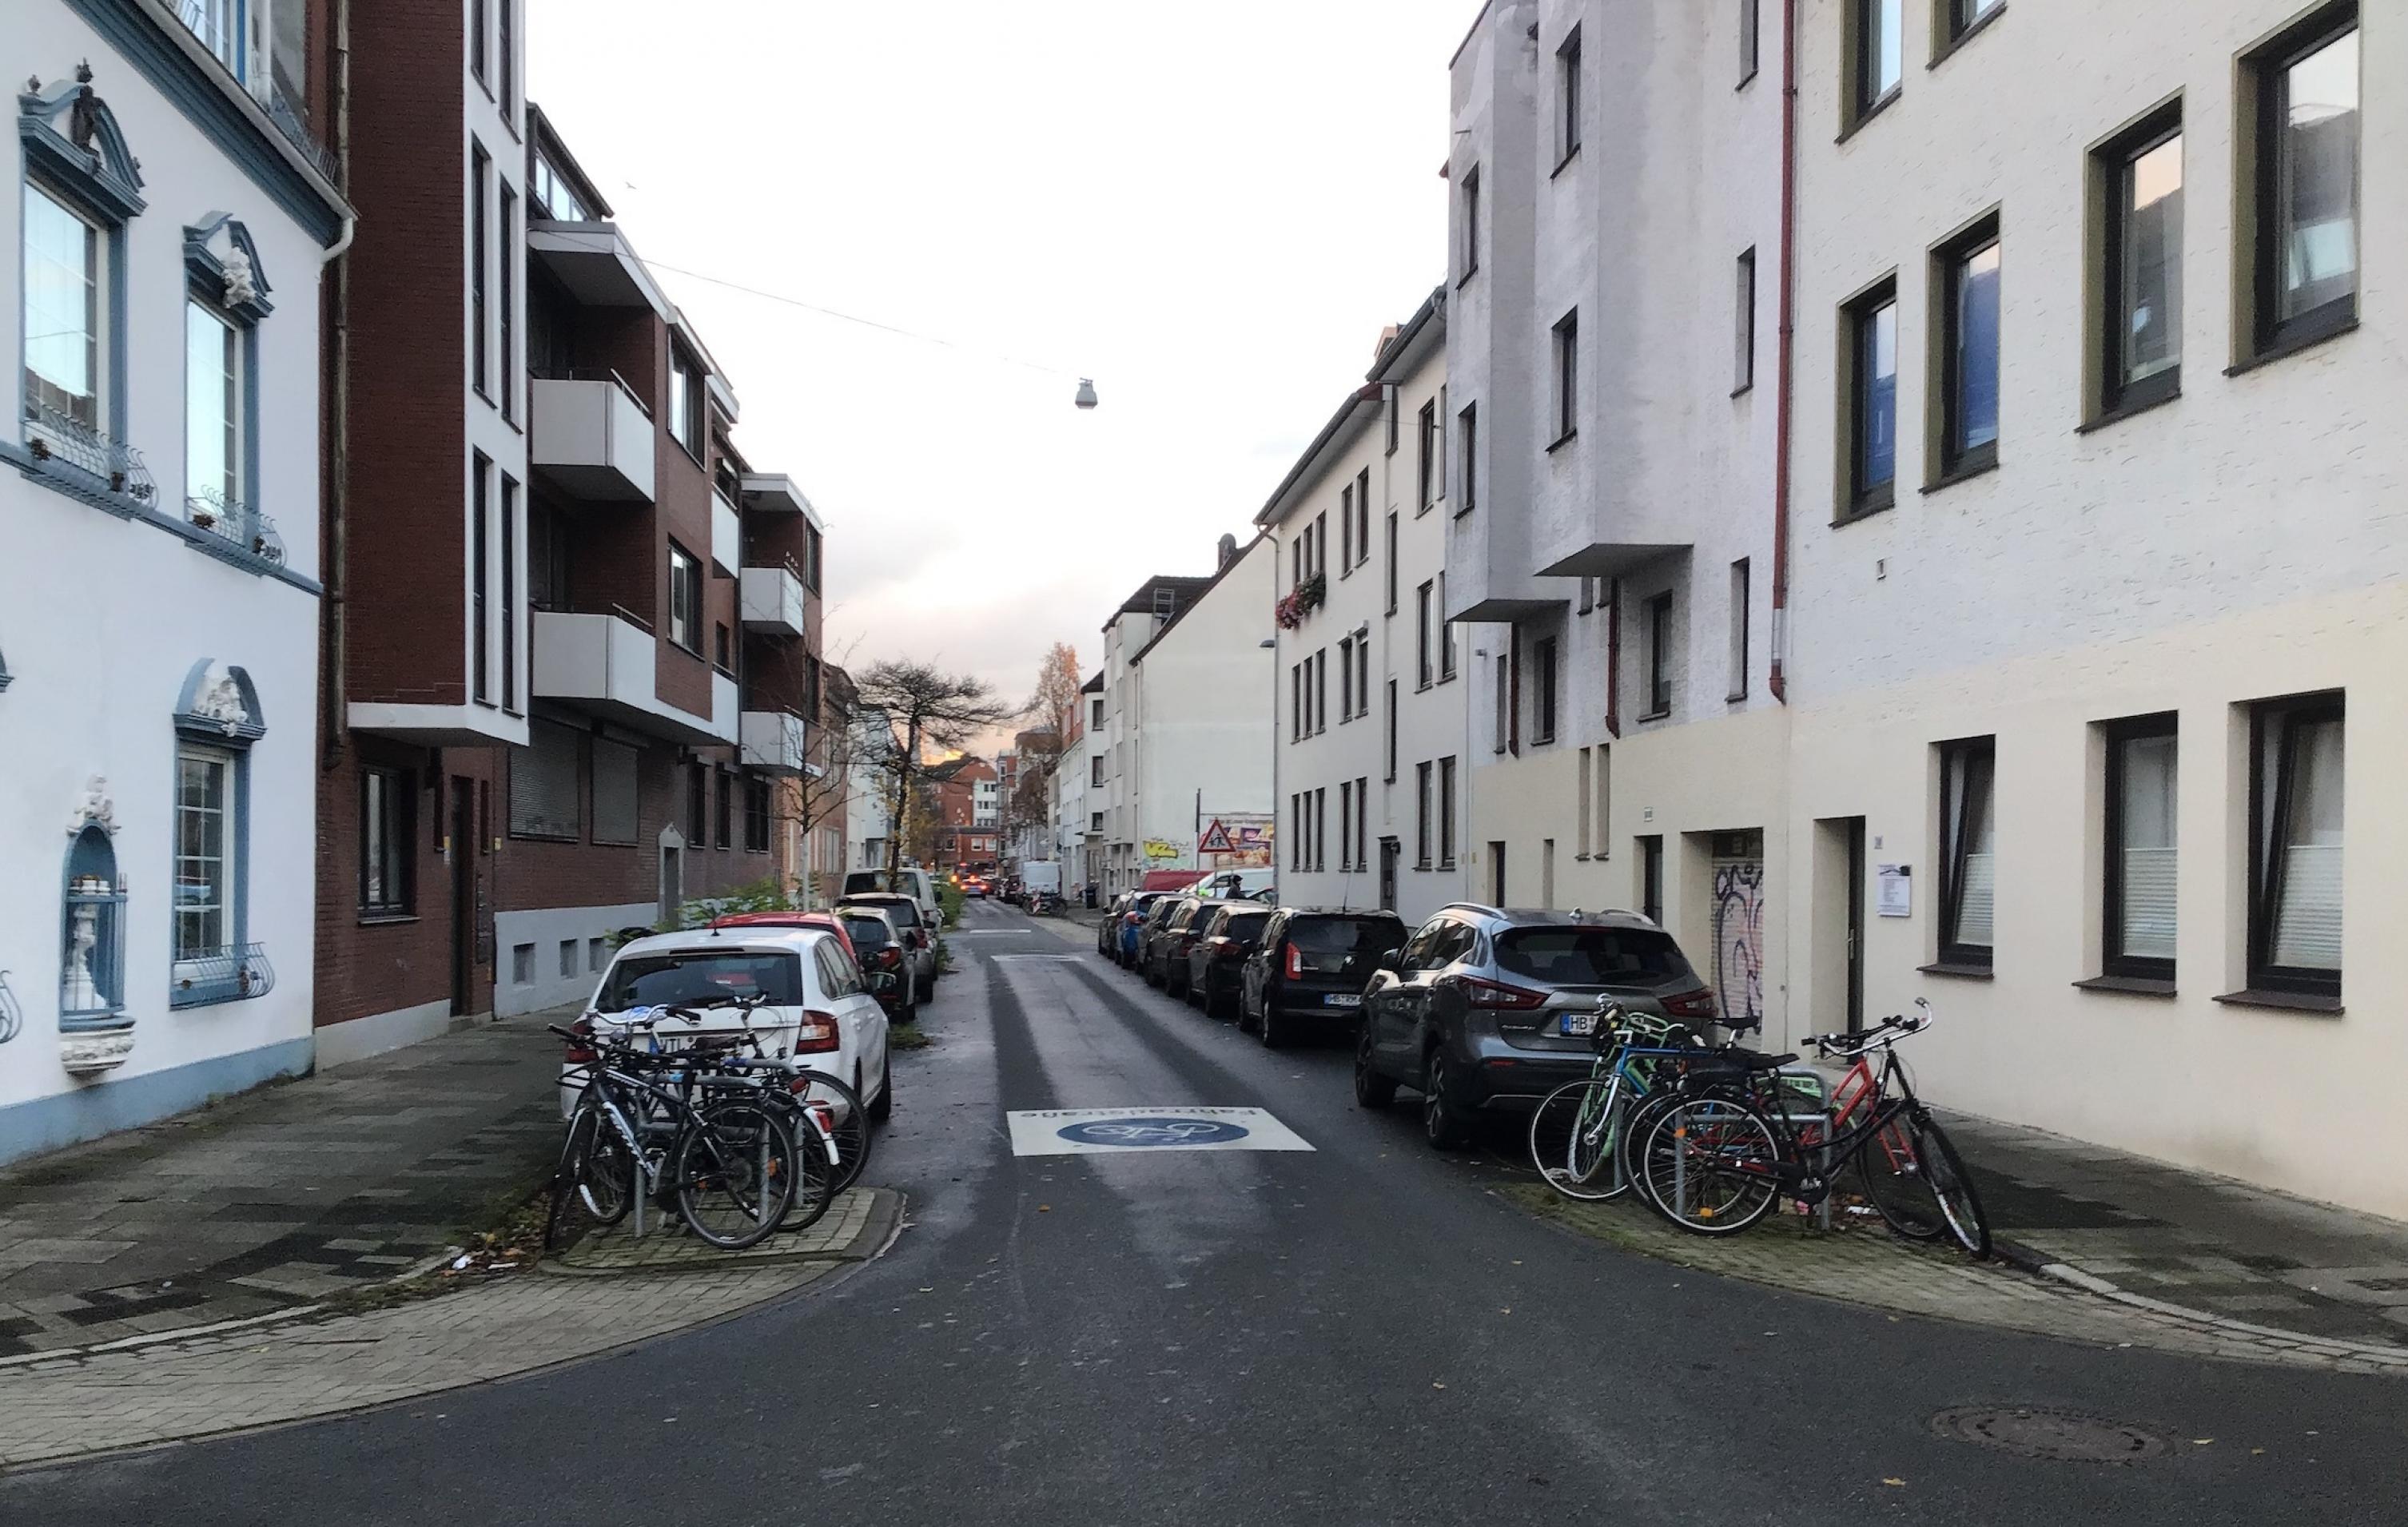 Direkt an der Kreuzung stehen Fahrräder, die an Bügeln angeschlossen sind. Hinter ihnen parken recht und links am Fahrbahnrand Autos